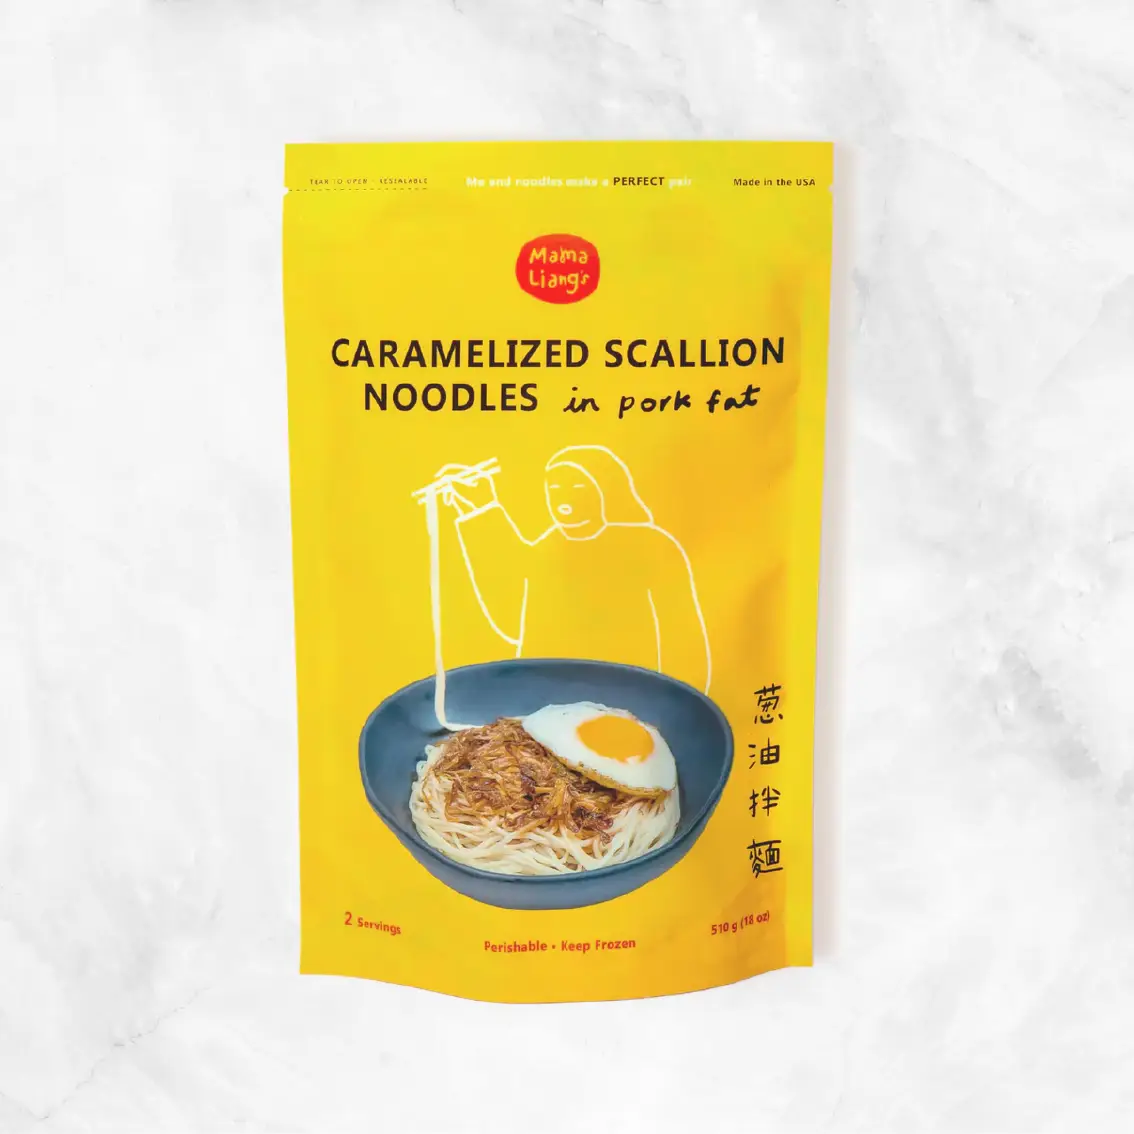 Caramelized Scallion Noodles